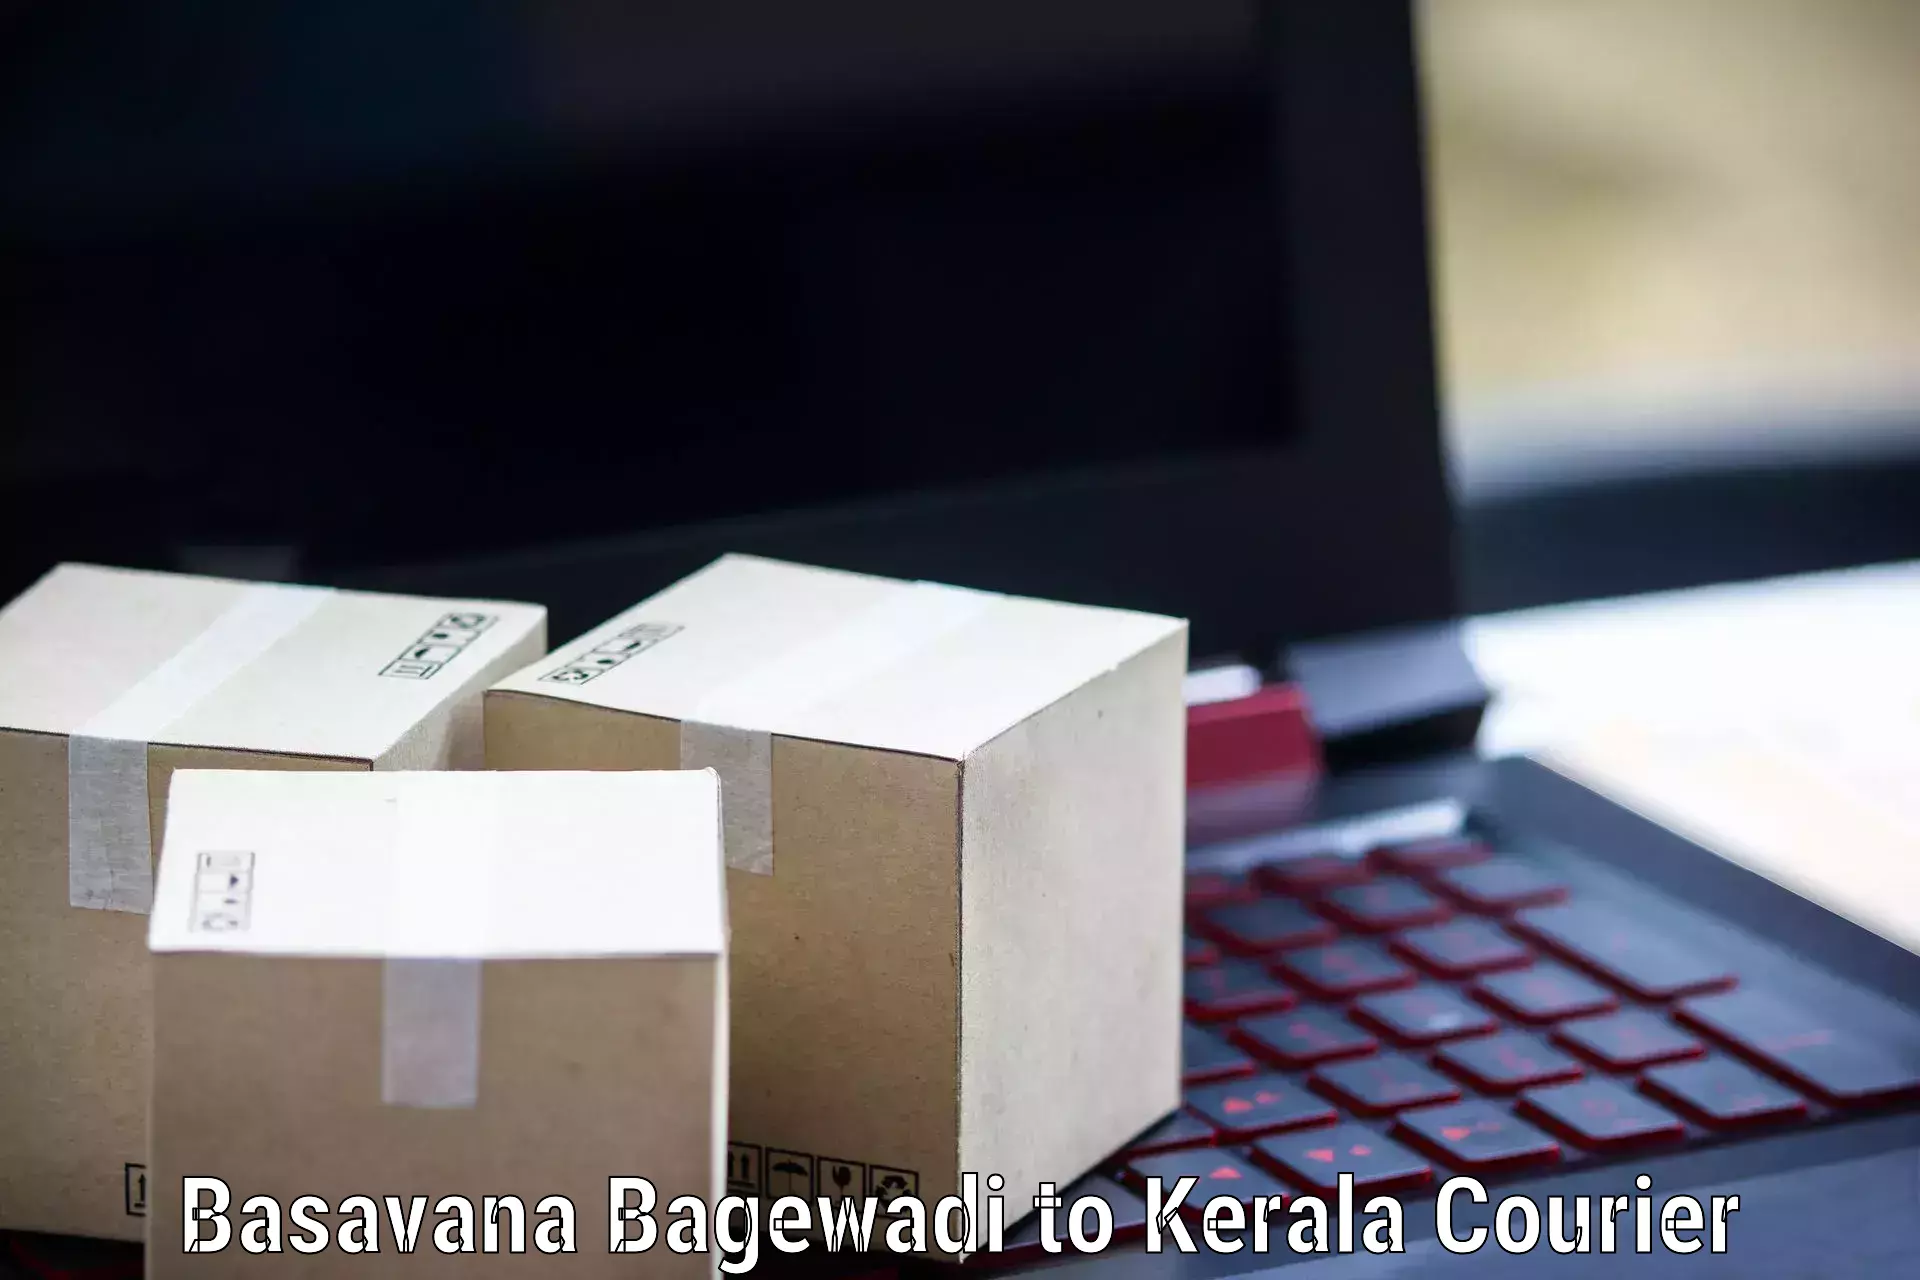 End-to-end delivery Basavana Bagewadi to Perumbavoor